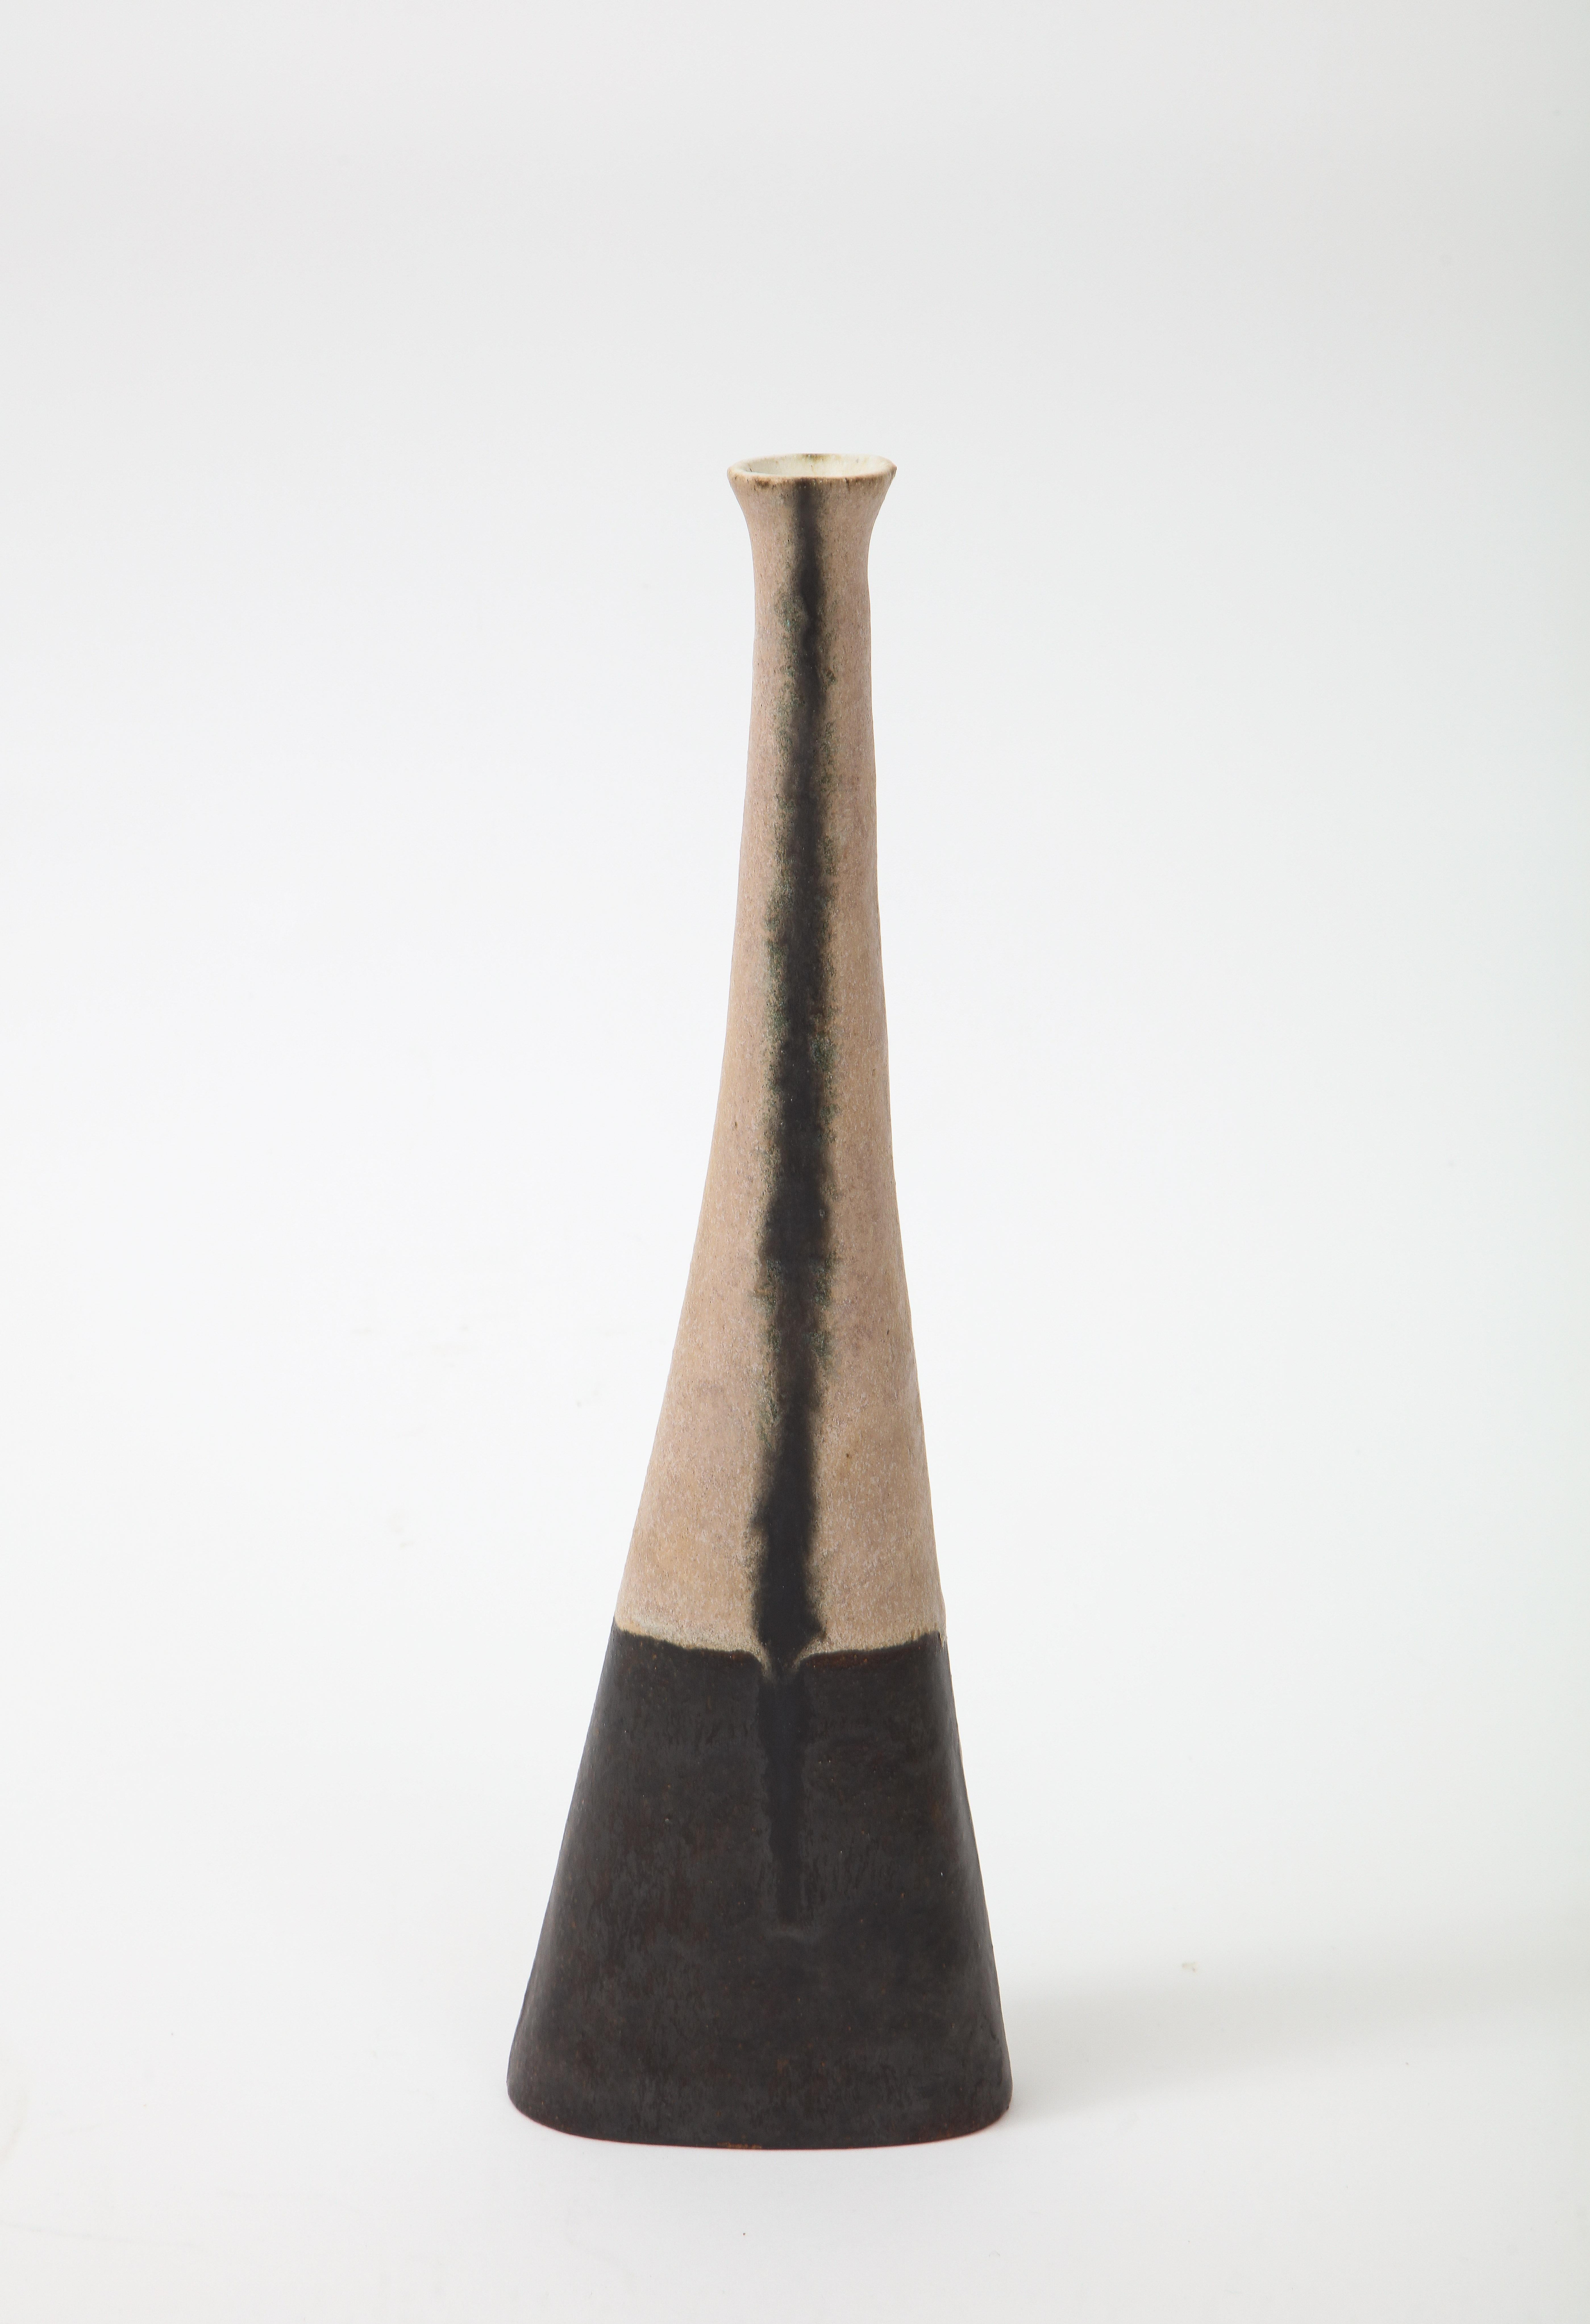 Glazed Bruno Gambone Stoneware or Ceramic Vase, Italy, 1970s